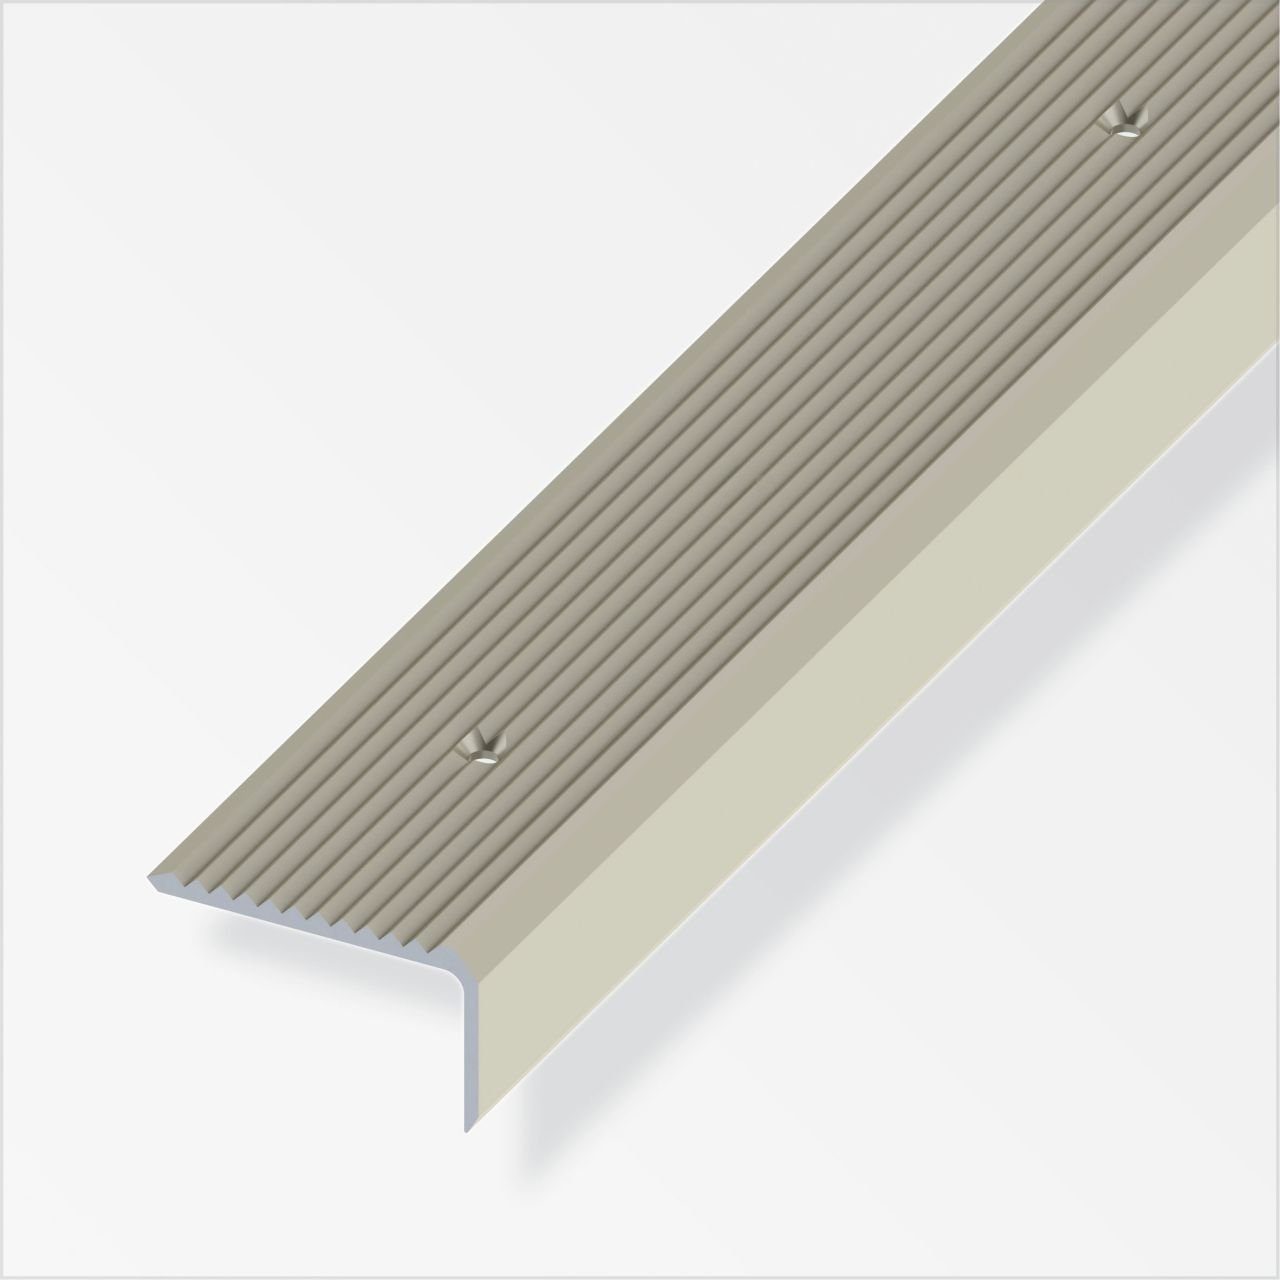 41 x mm m, 23 alfer Aluminium Treppenstufen-Seitenblende Treppenprofil 1 alfer